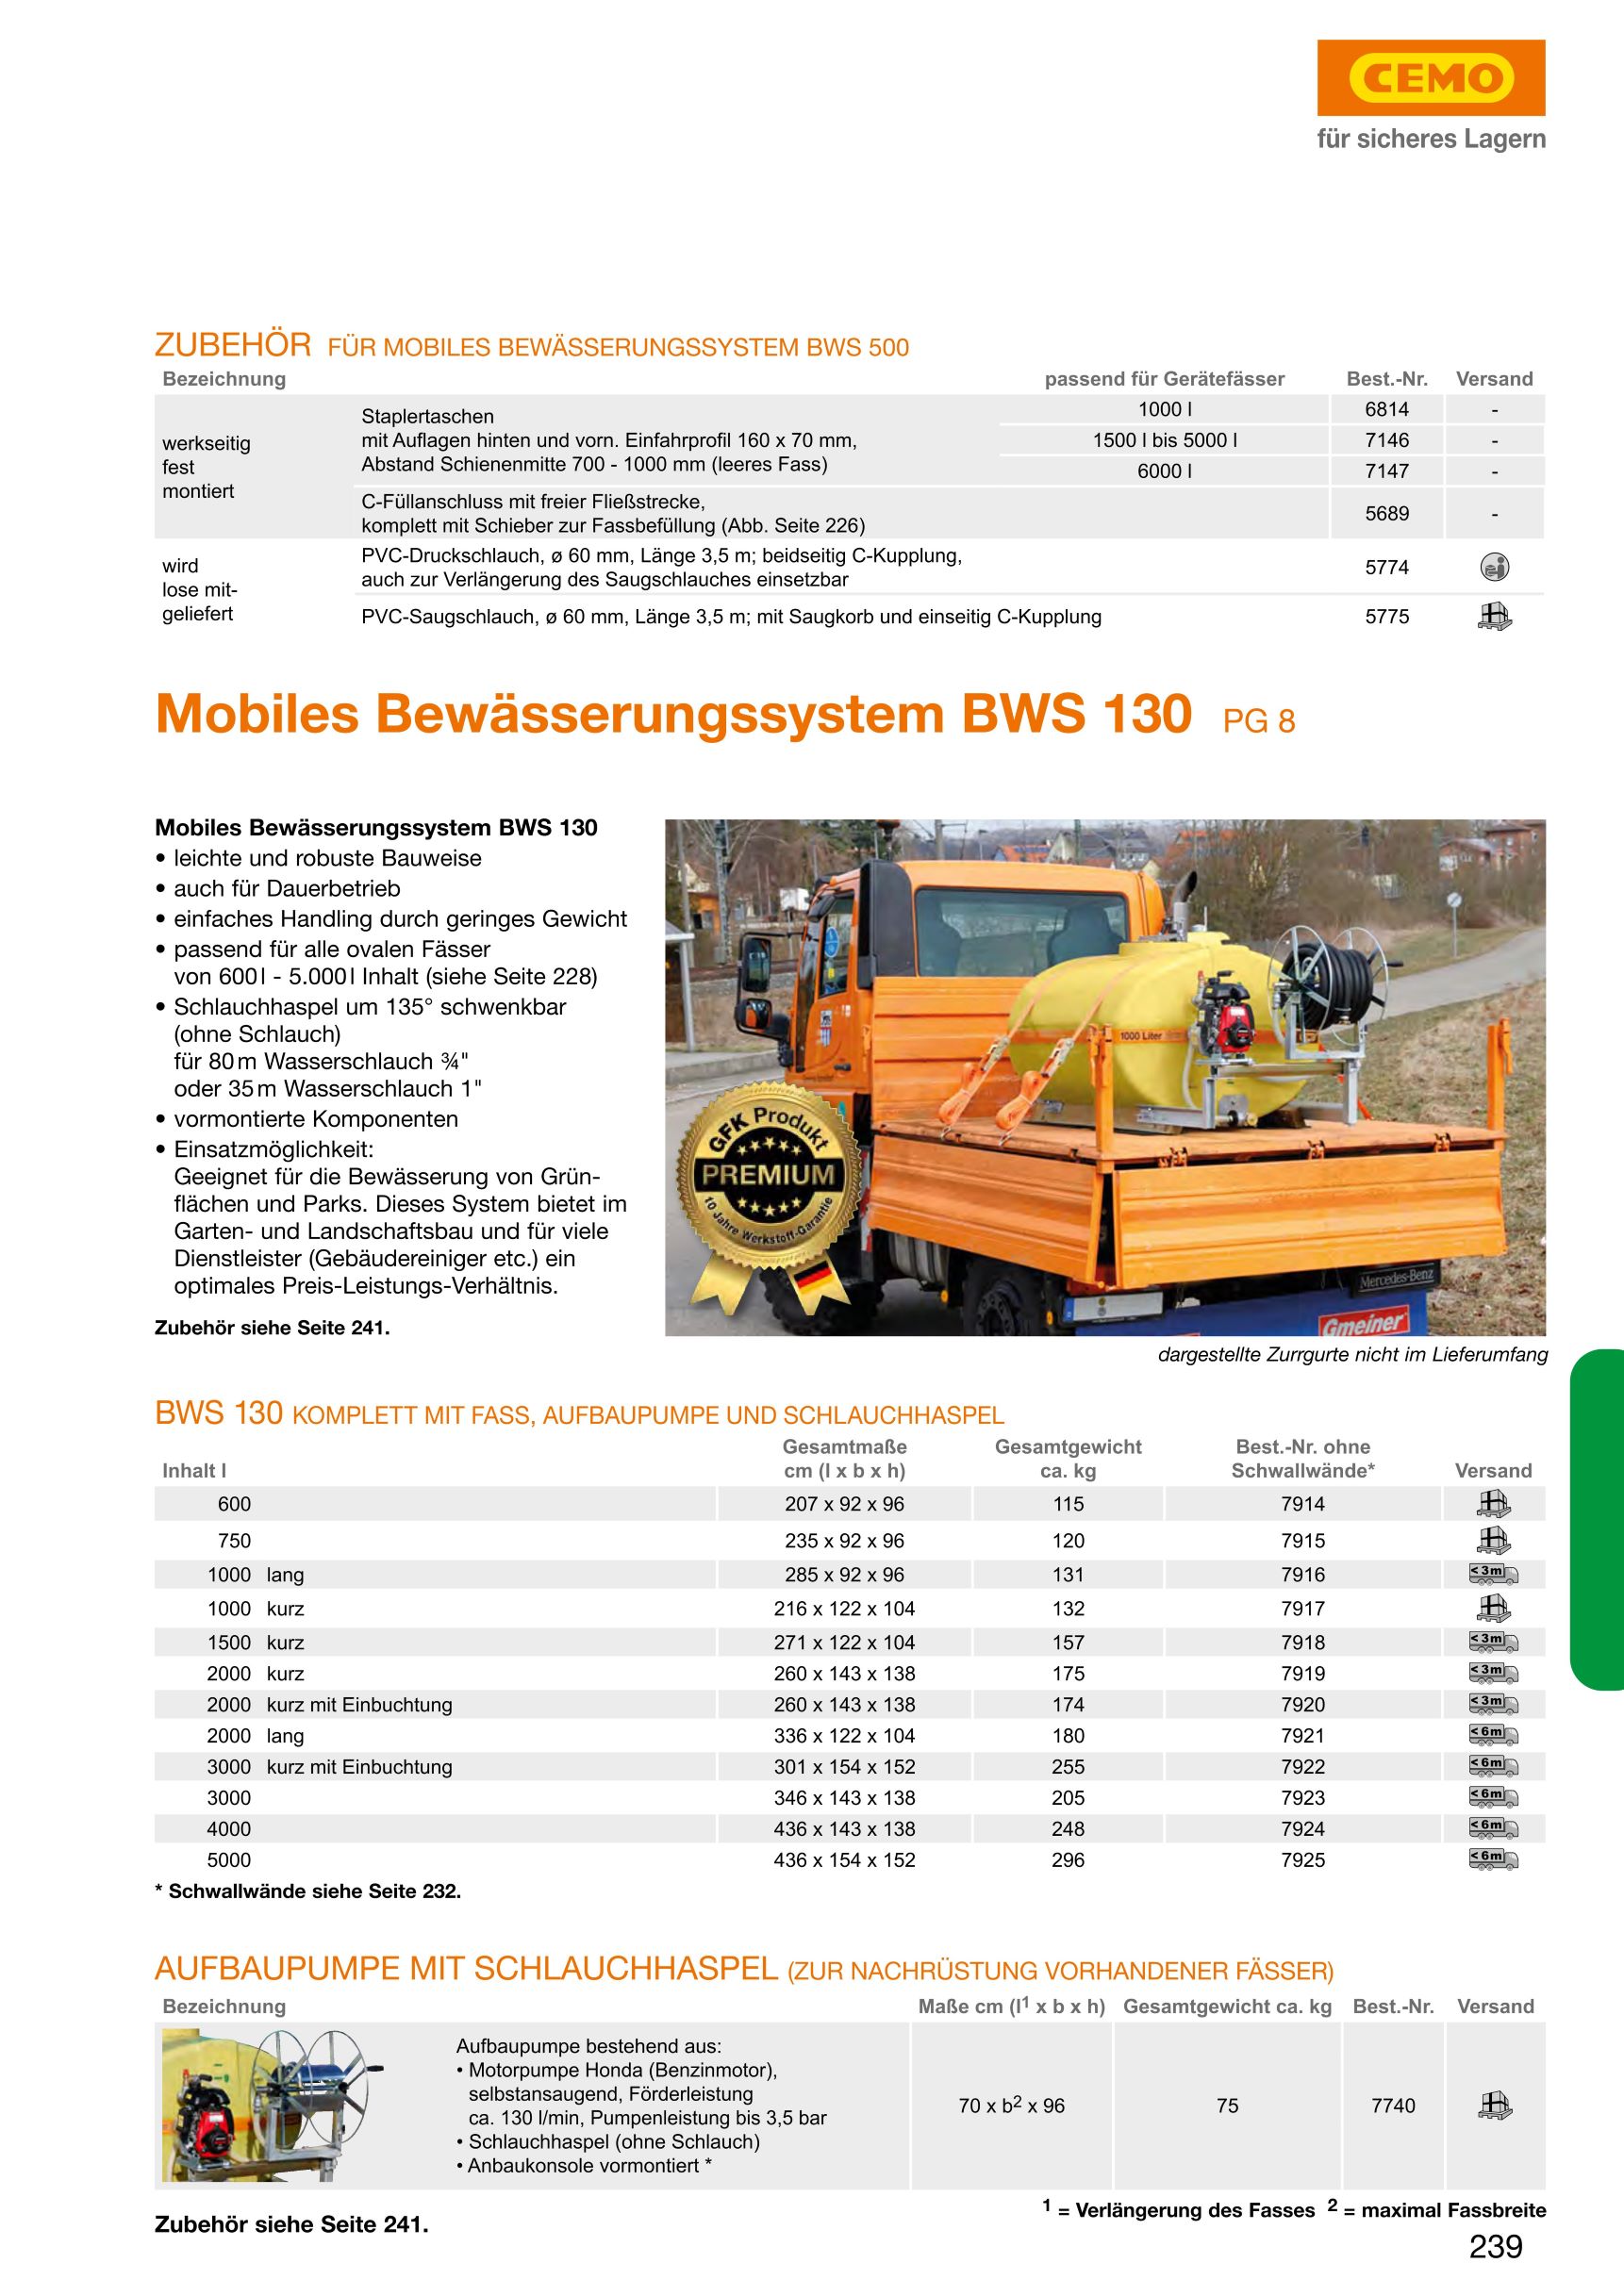 CEMO Mobiles Bewässerungssystem BWS 130, 3000 l, Motorpumpe - 7923